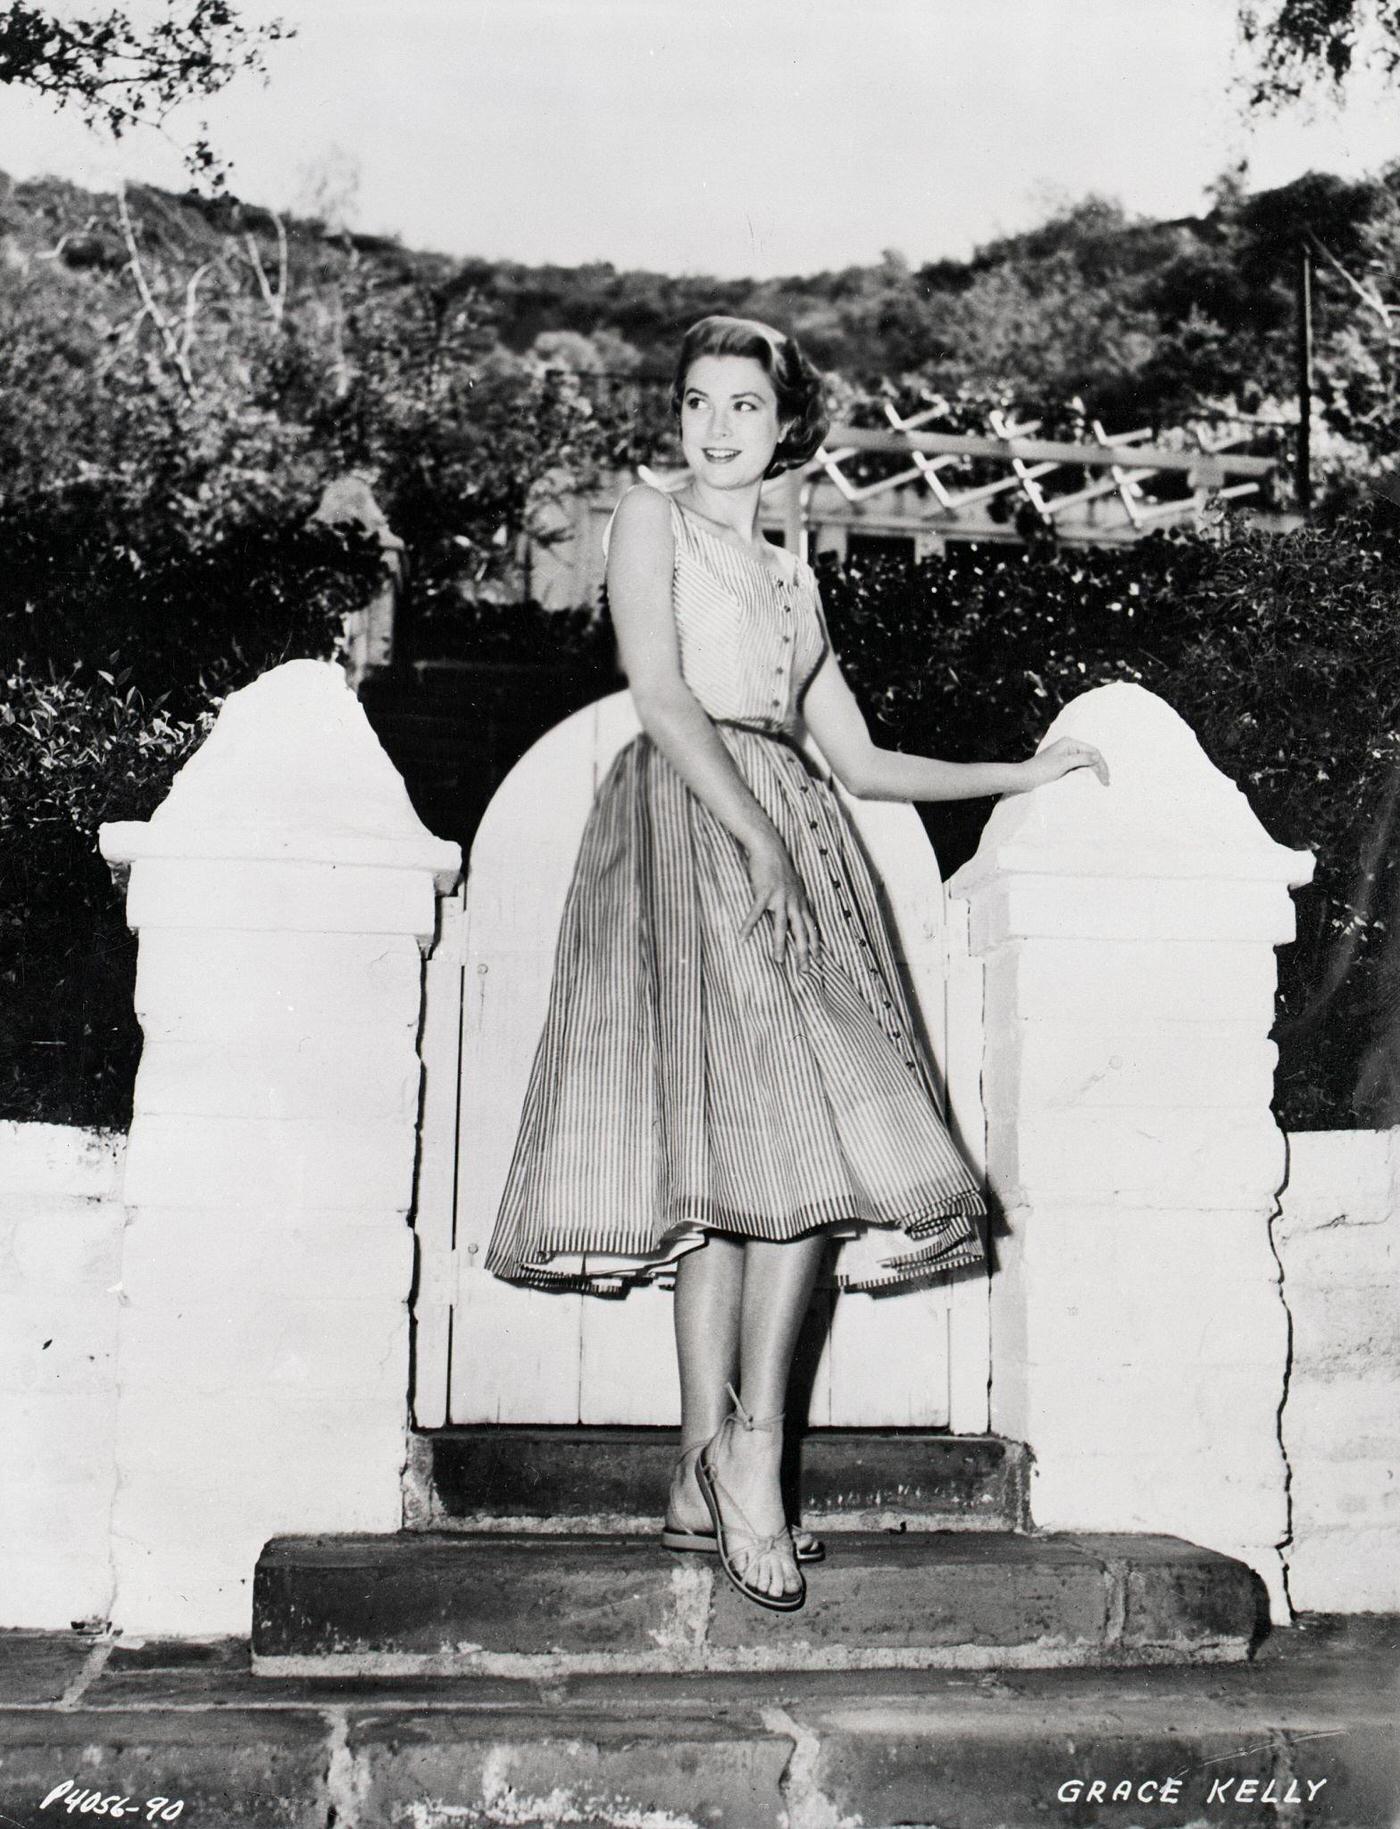 Grace Kelly models an Edith Head designer dress by a garden gate, 1954